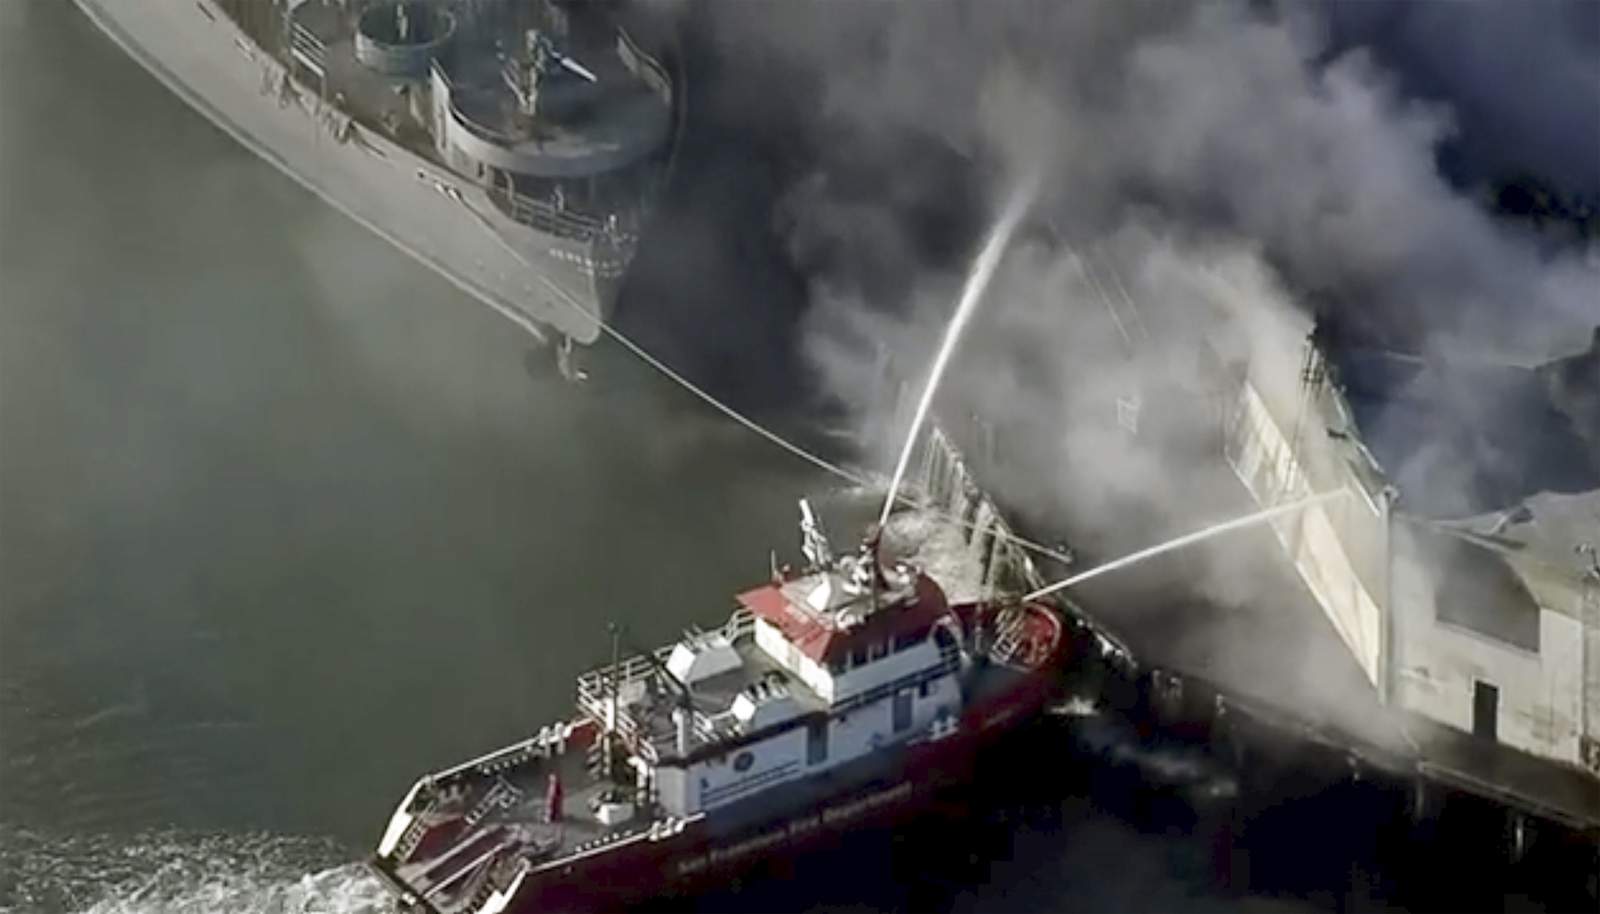 Fire destroys warehouse on San Franciscos Fishermans Wharf